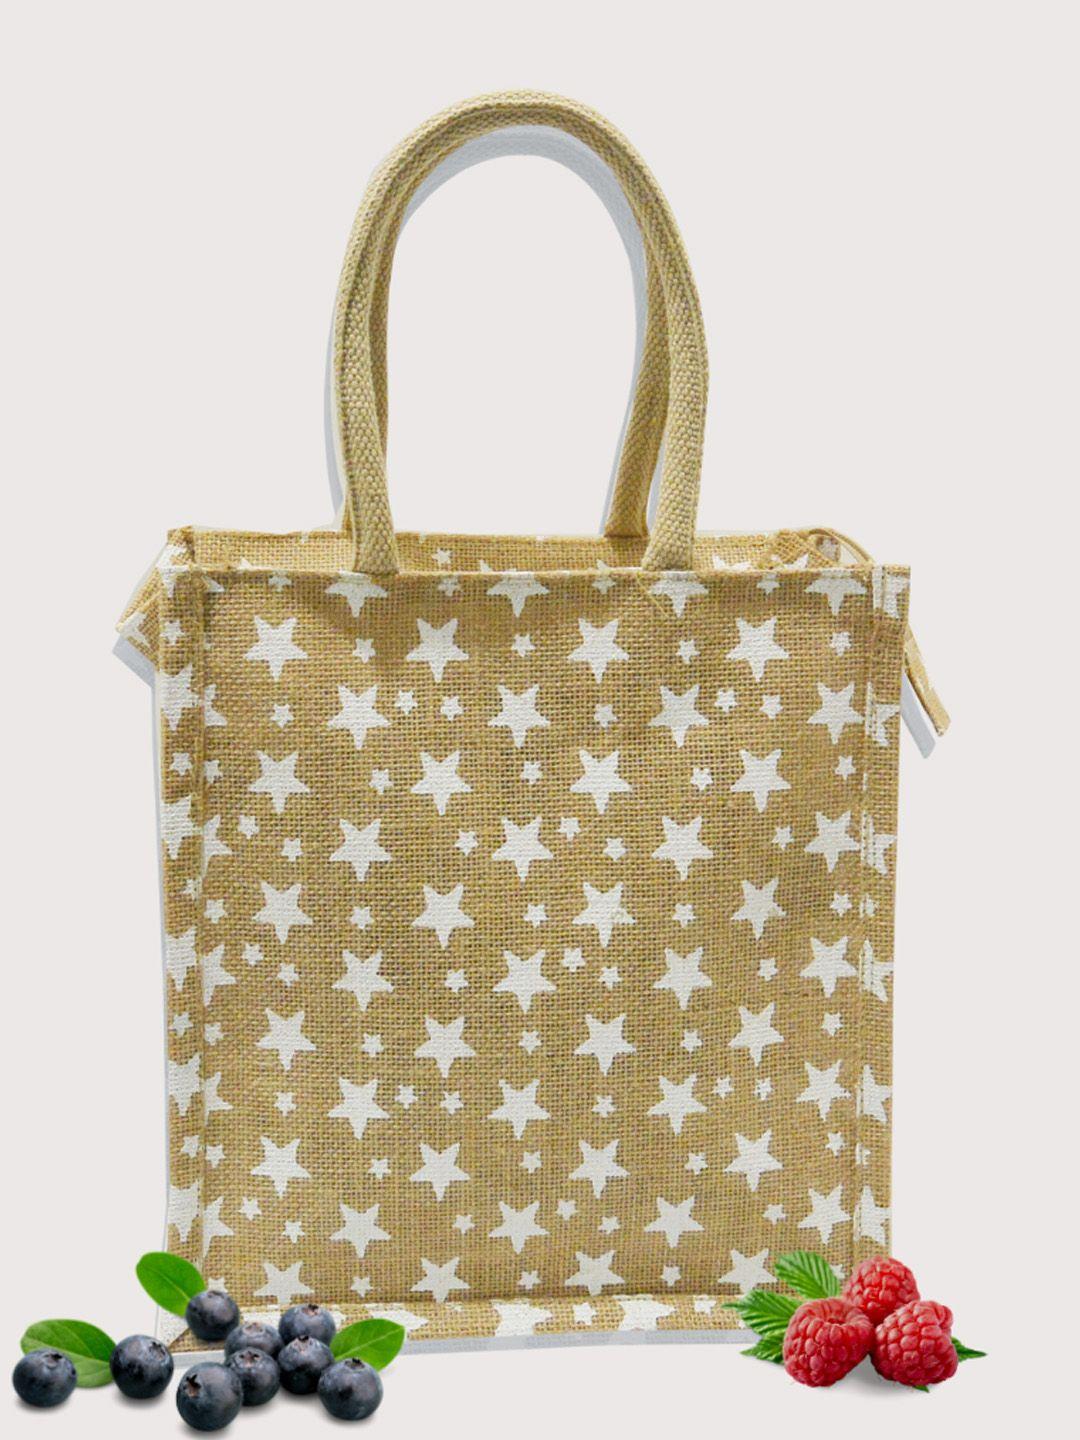 earthbags geometric printed jute tote bag handbags